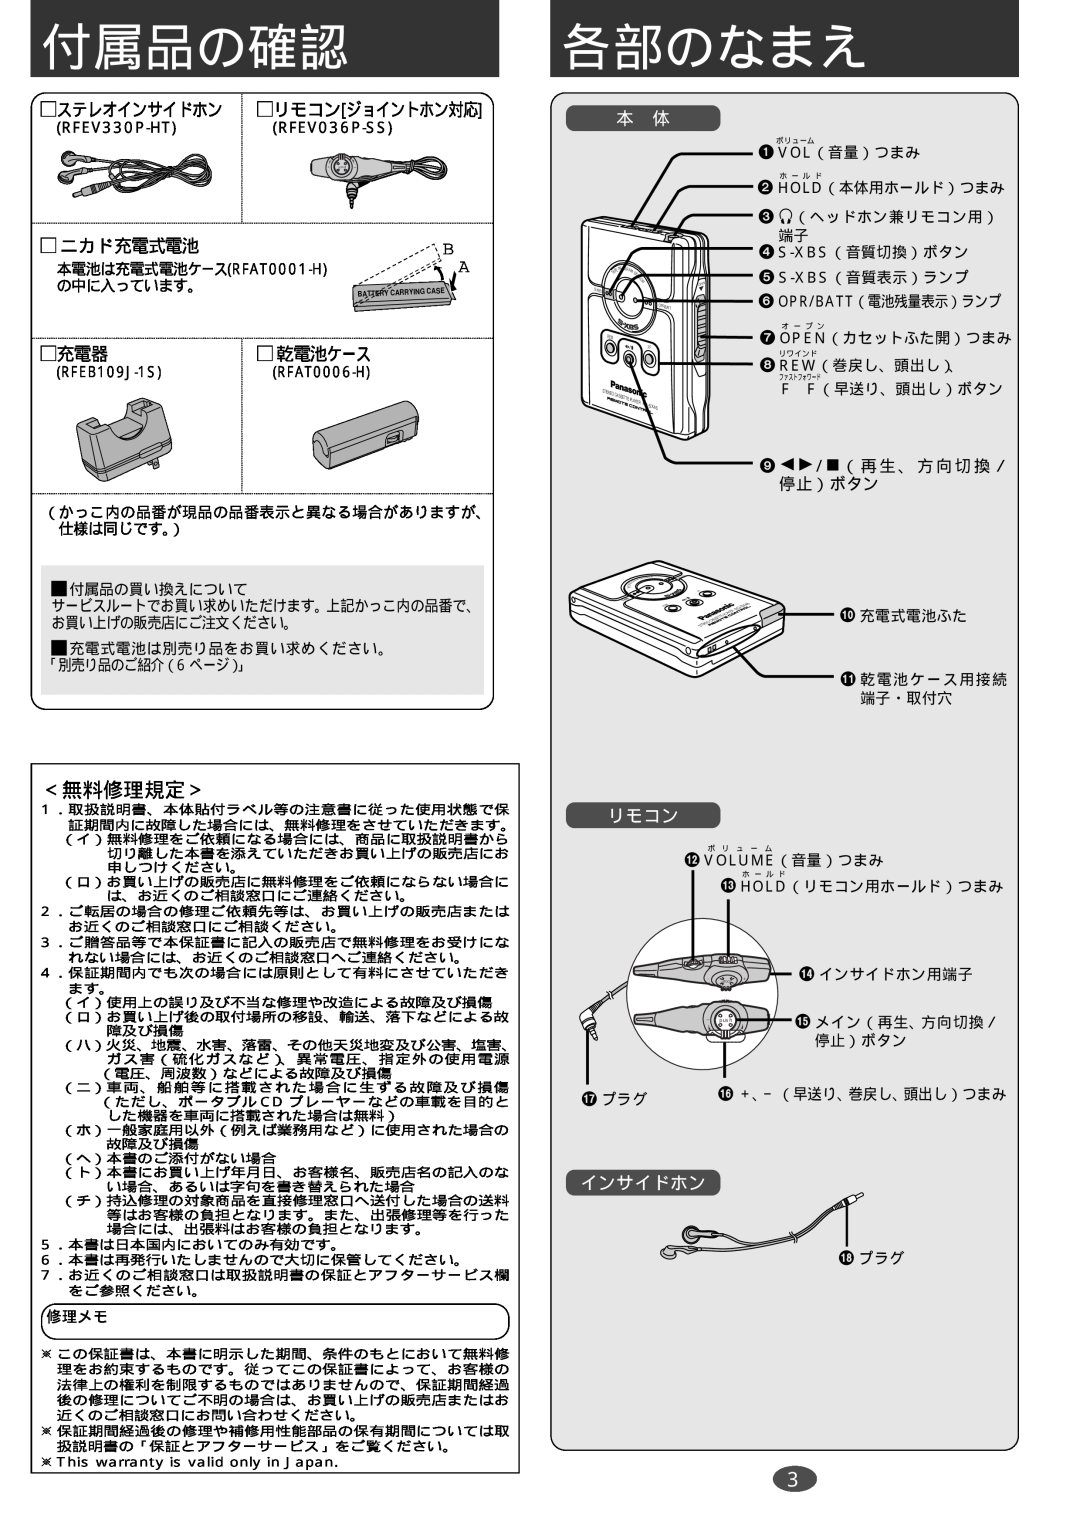 Panasonic RQ-SX46 manual 付属品の確認, 各部のなまえ, ＜無料修理規定＞, リモコン, インサイドホン, 921/ （ 再 生 、 方 向 切 換 ／ 停止）ボタン 